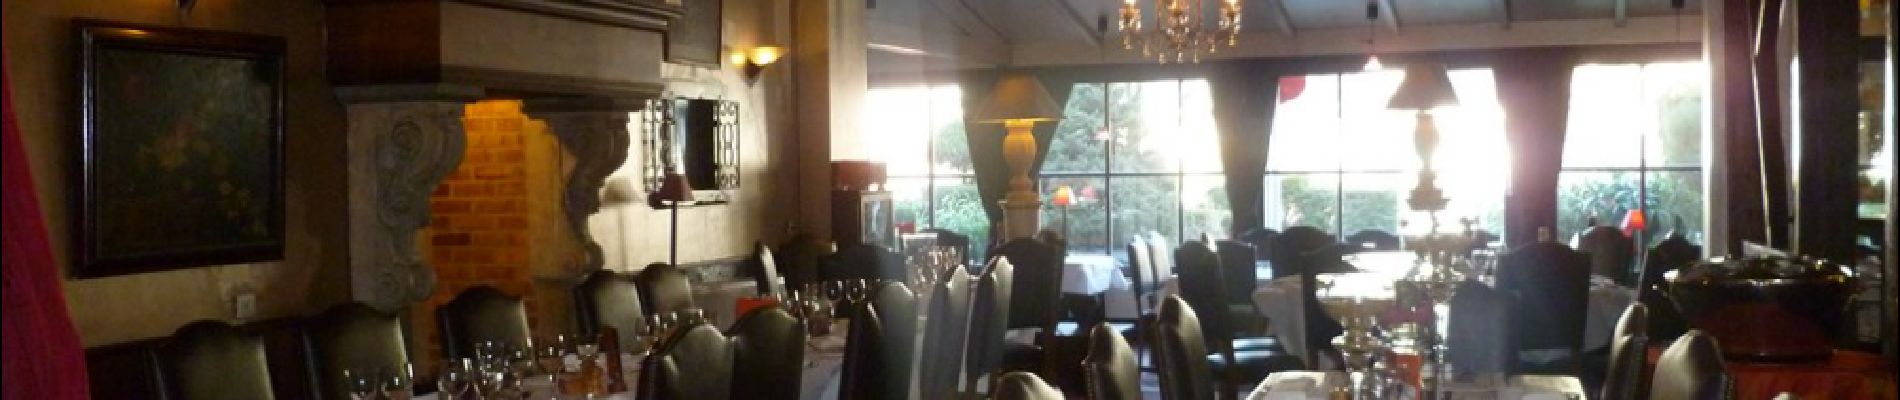 POI Durbuy - Hotel - Restaurant : Jean de Bohême - 4 étoiles - Photo